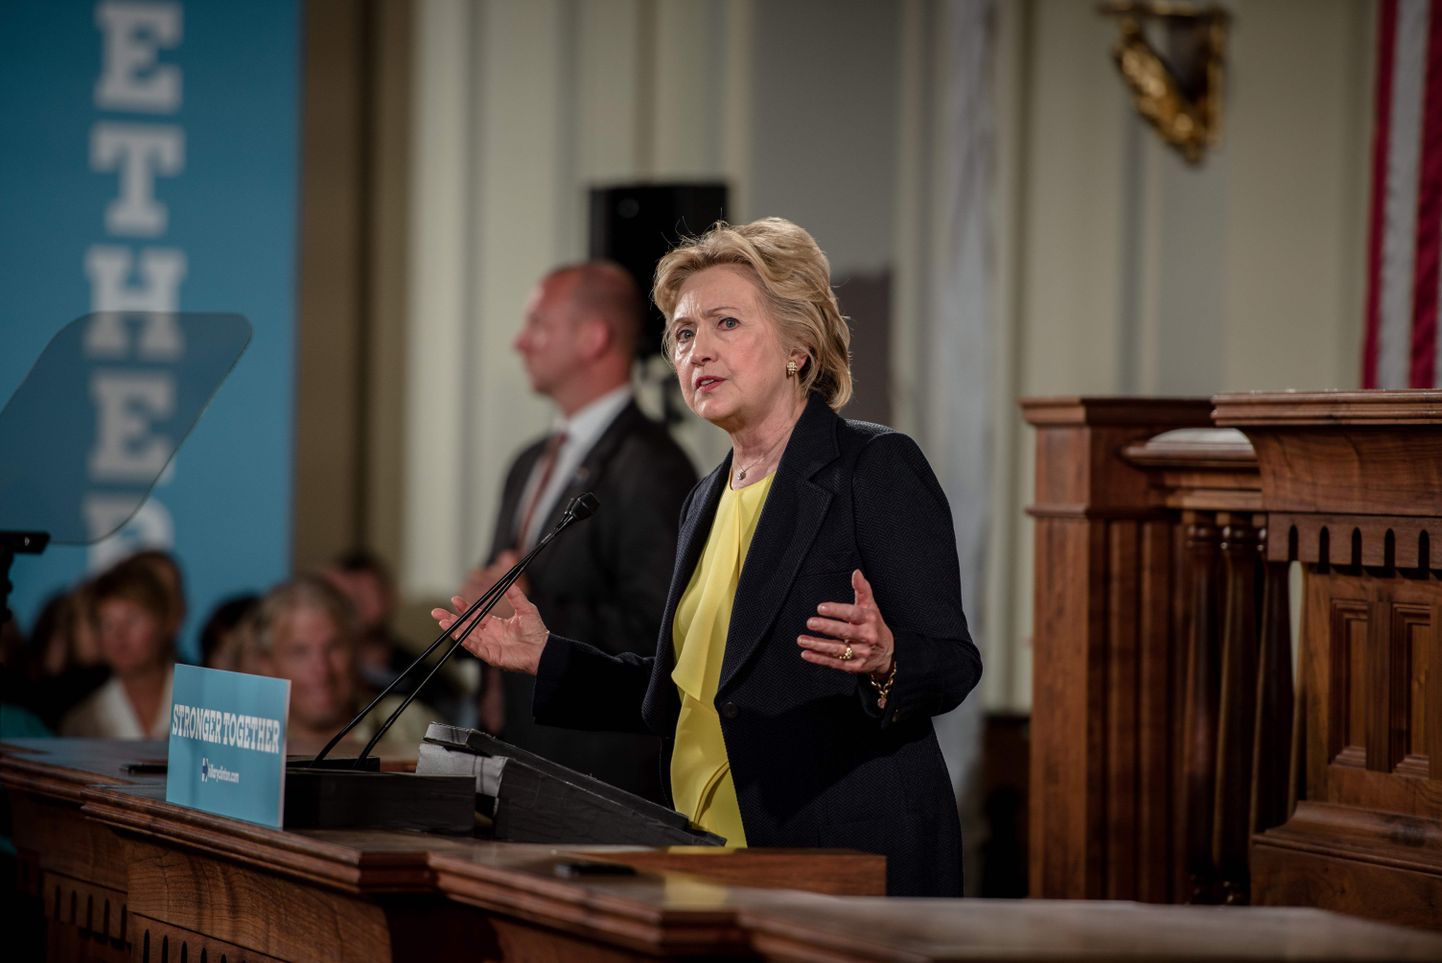 USA demokraatide eeldatav presidendikandidaat Hillary Clinton kõnelemas Springfieldis Illinois' osariigi vanas kongressihoones rassisuhetest.